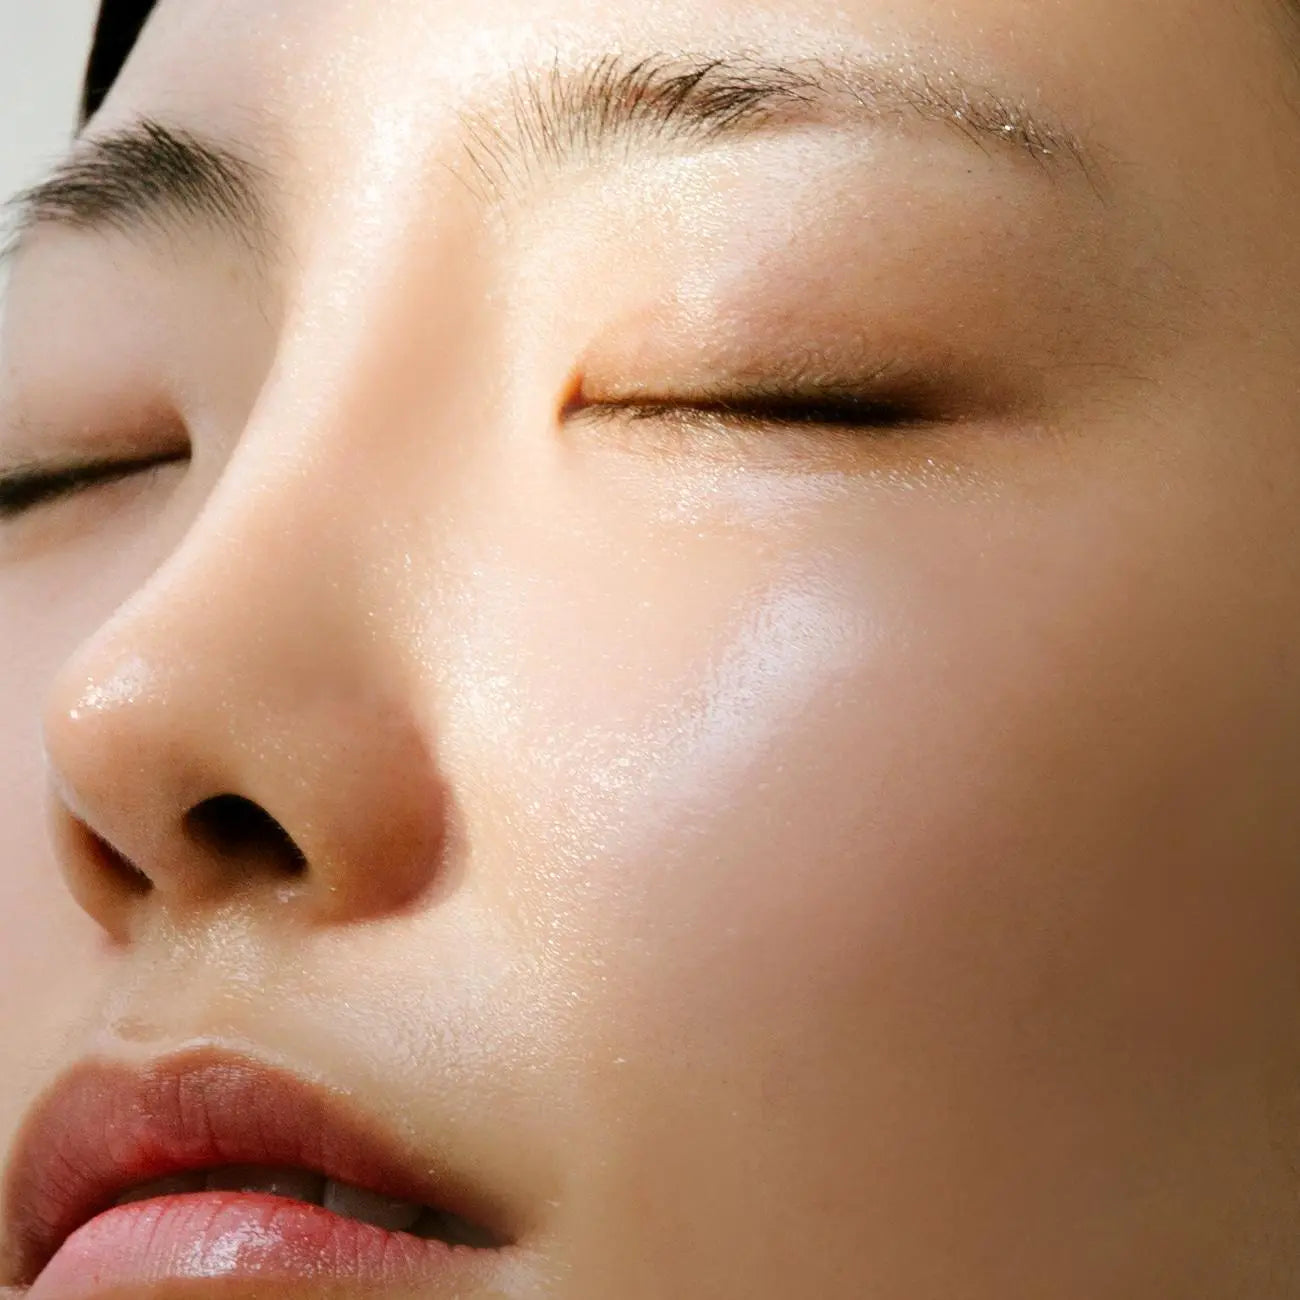 [Aromatica] Organic Neroli Brightening Facial Oil 30ml - Enrapturecosmetics